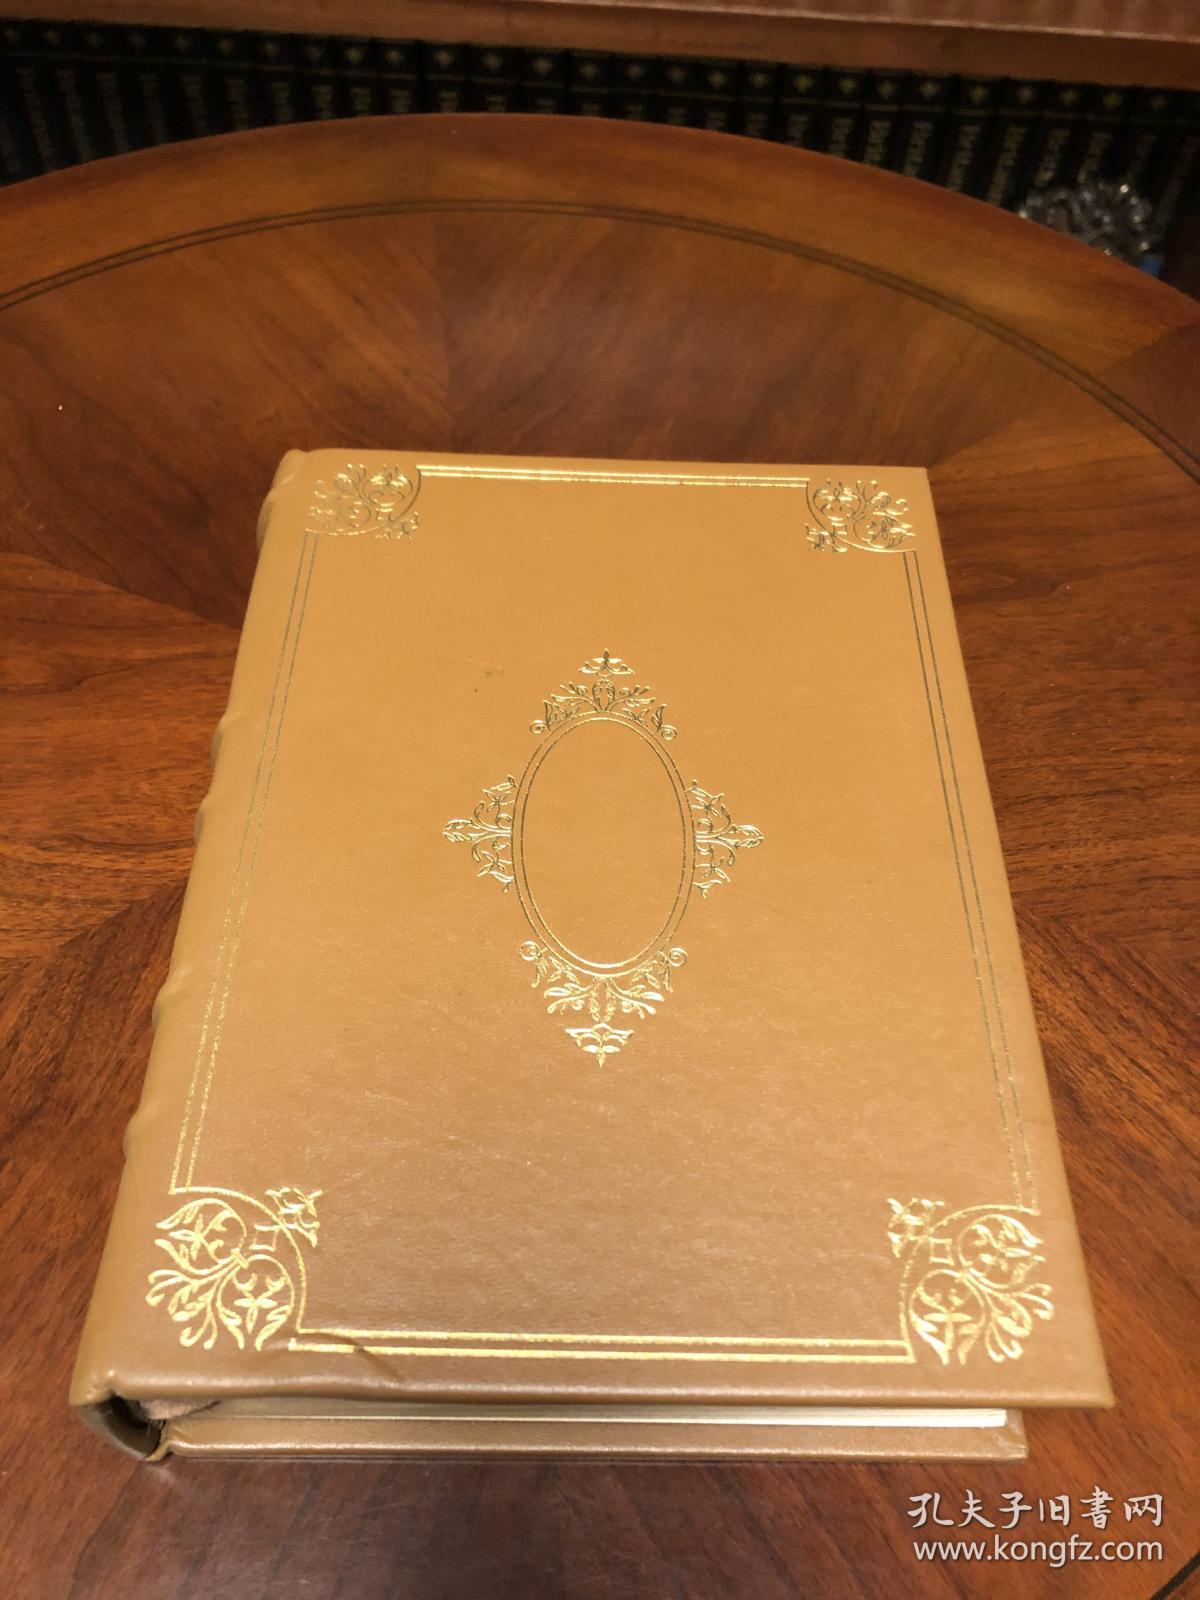 1931年普利策奖

Years Of Grace by Margaret A Barnes Franklin Library 1976 Limited Edition
《优雅年代》富兰克林出版社真皮精品，限量收藏版。